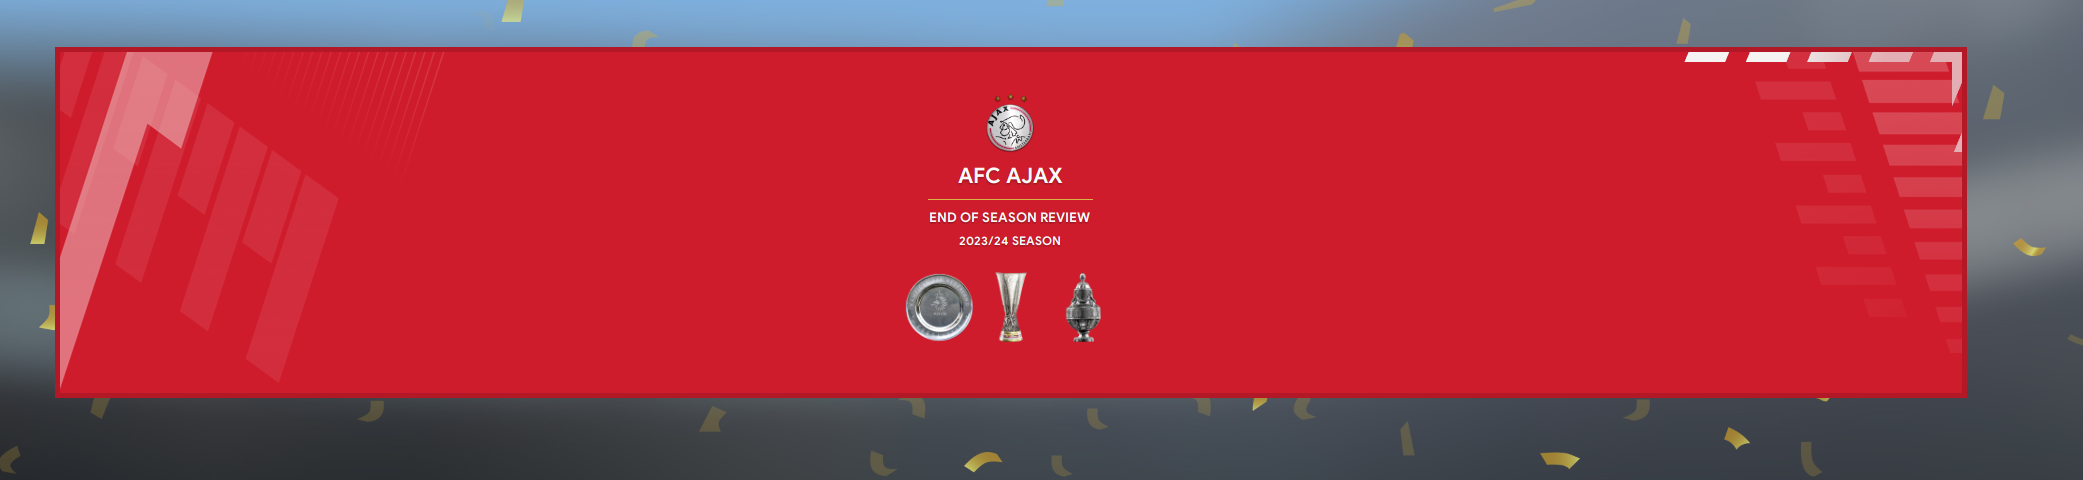 3 CUPS FIRST SEASON AJAX update.png